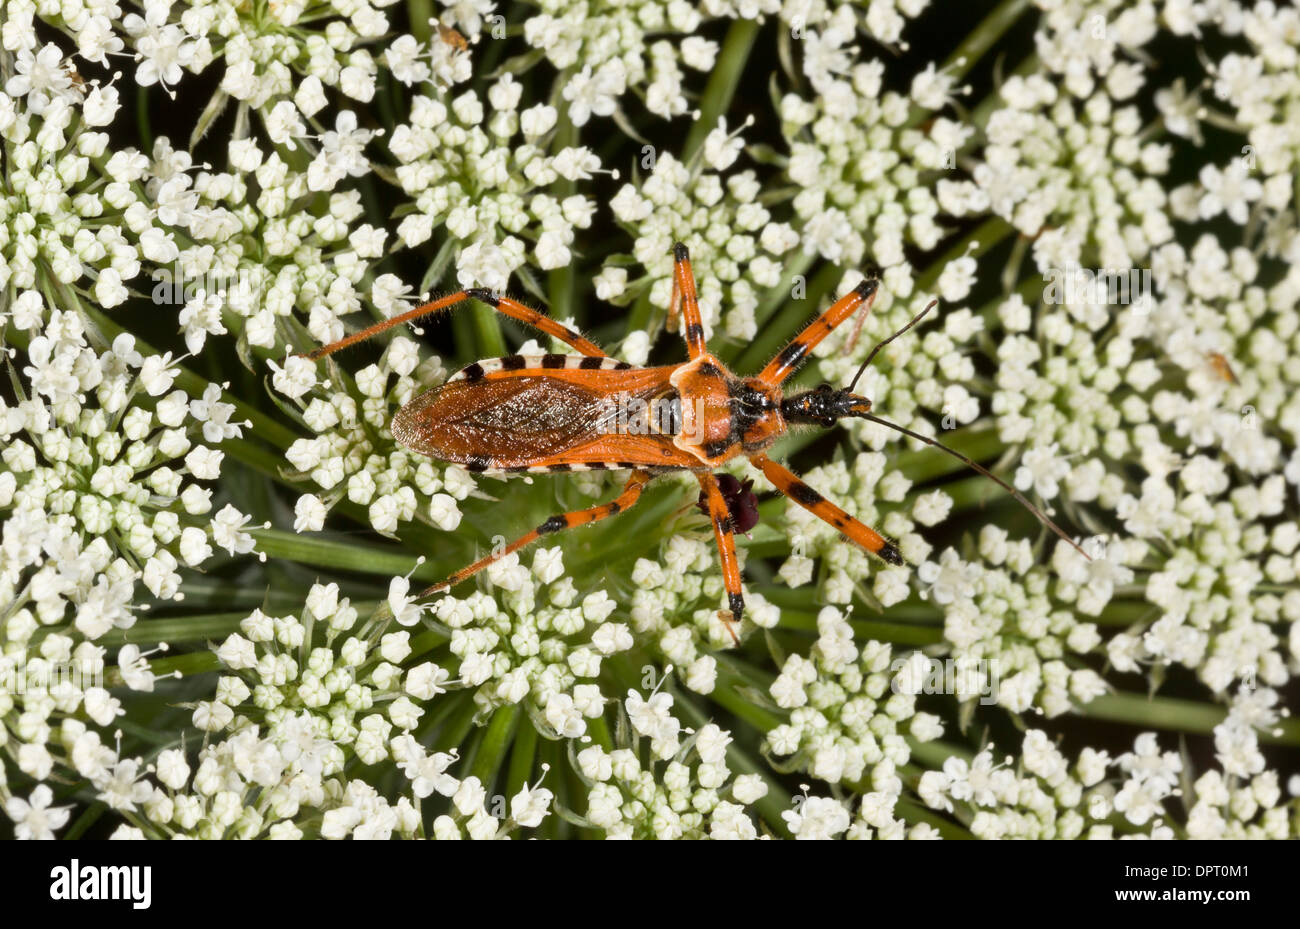 An assassin bug, Rhinocoris iracundus hunting on umbellifer flowers. Turkey. Stock Photo